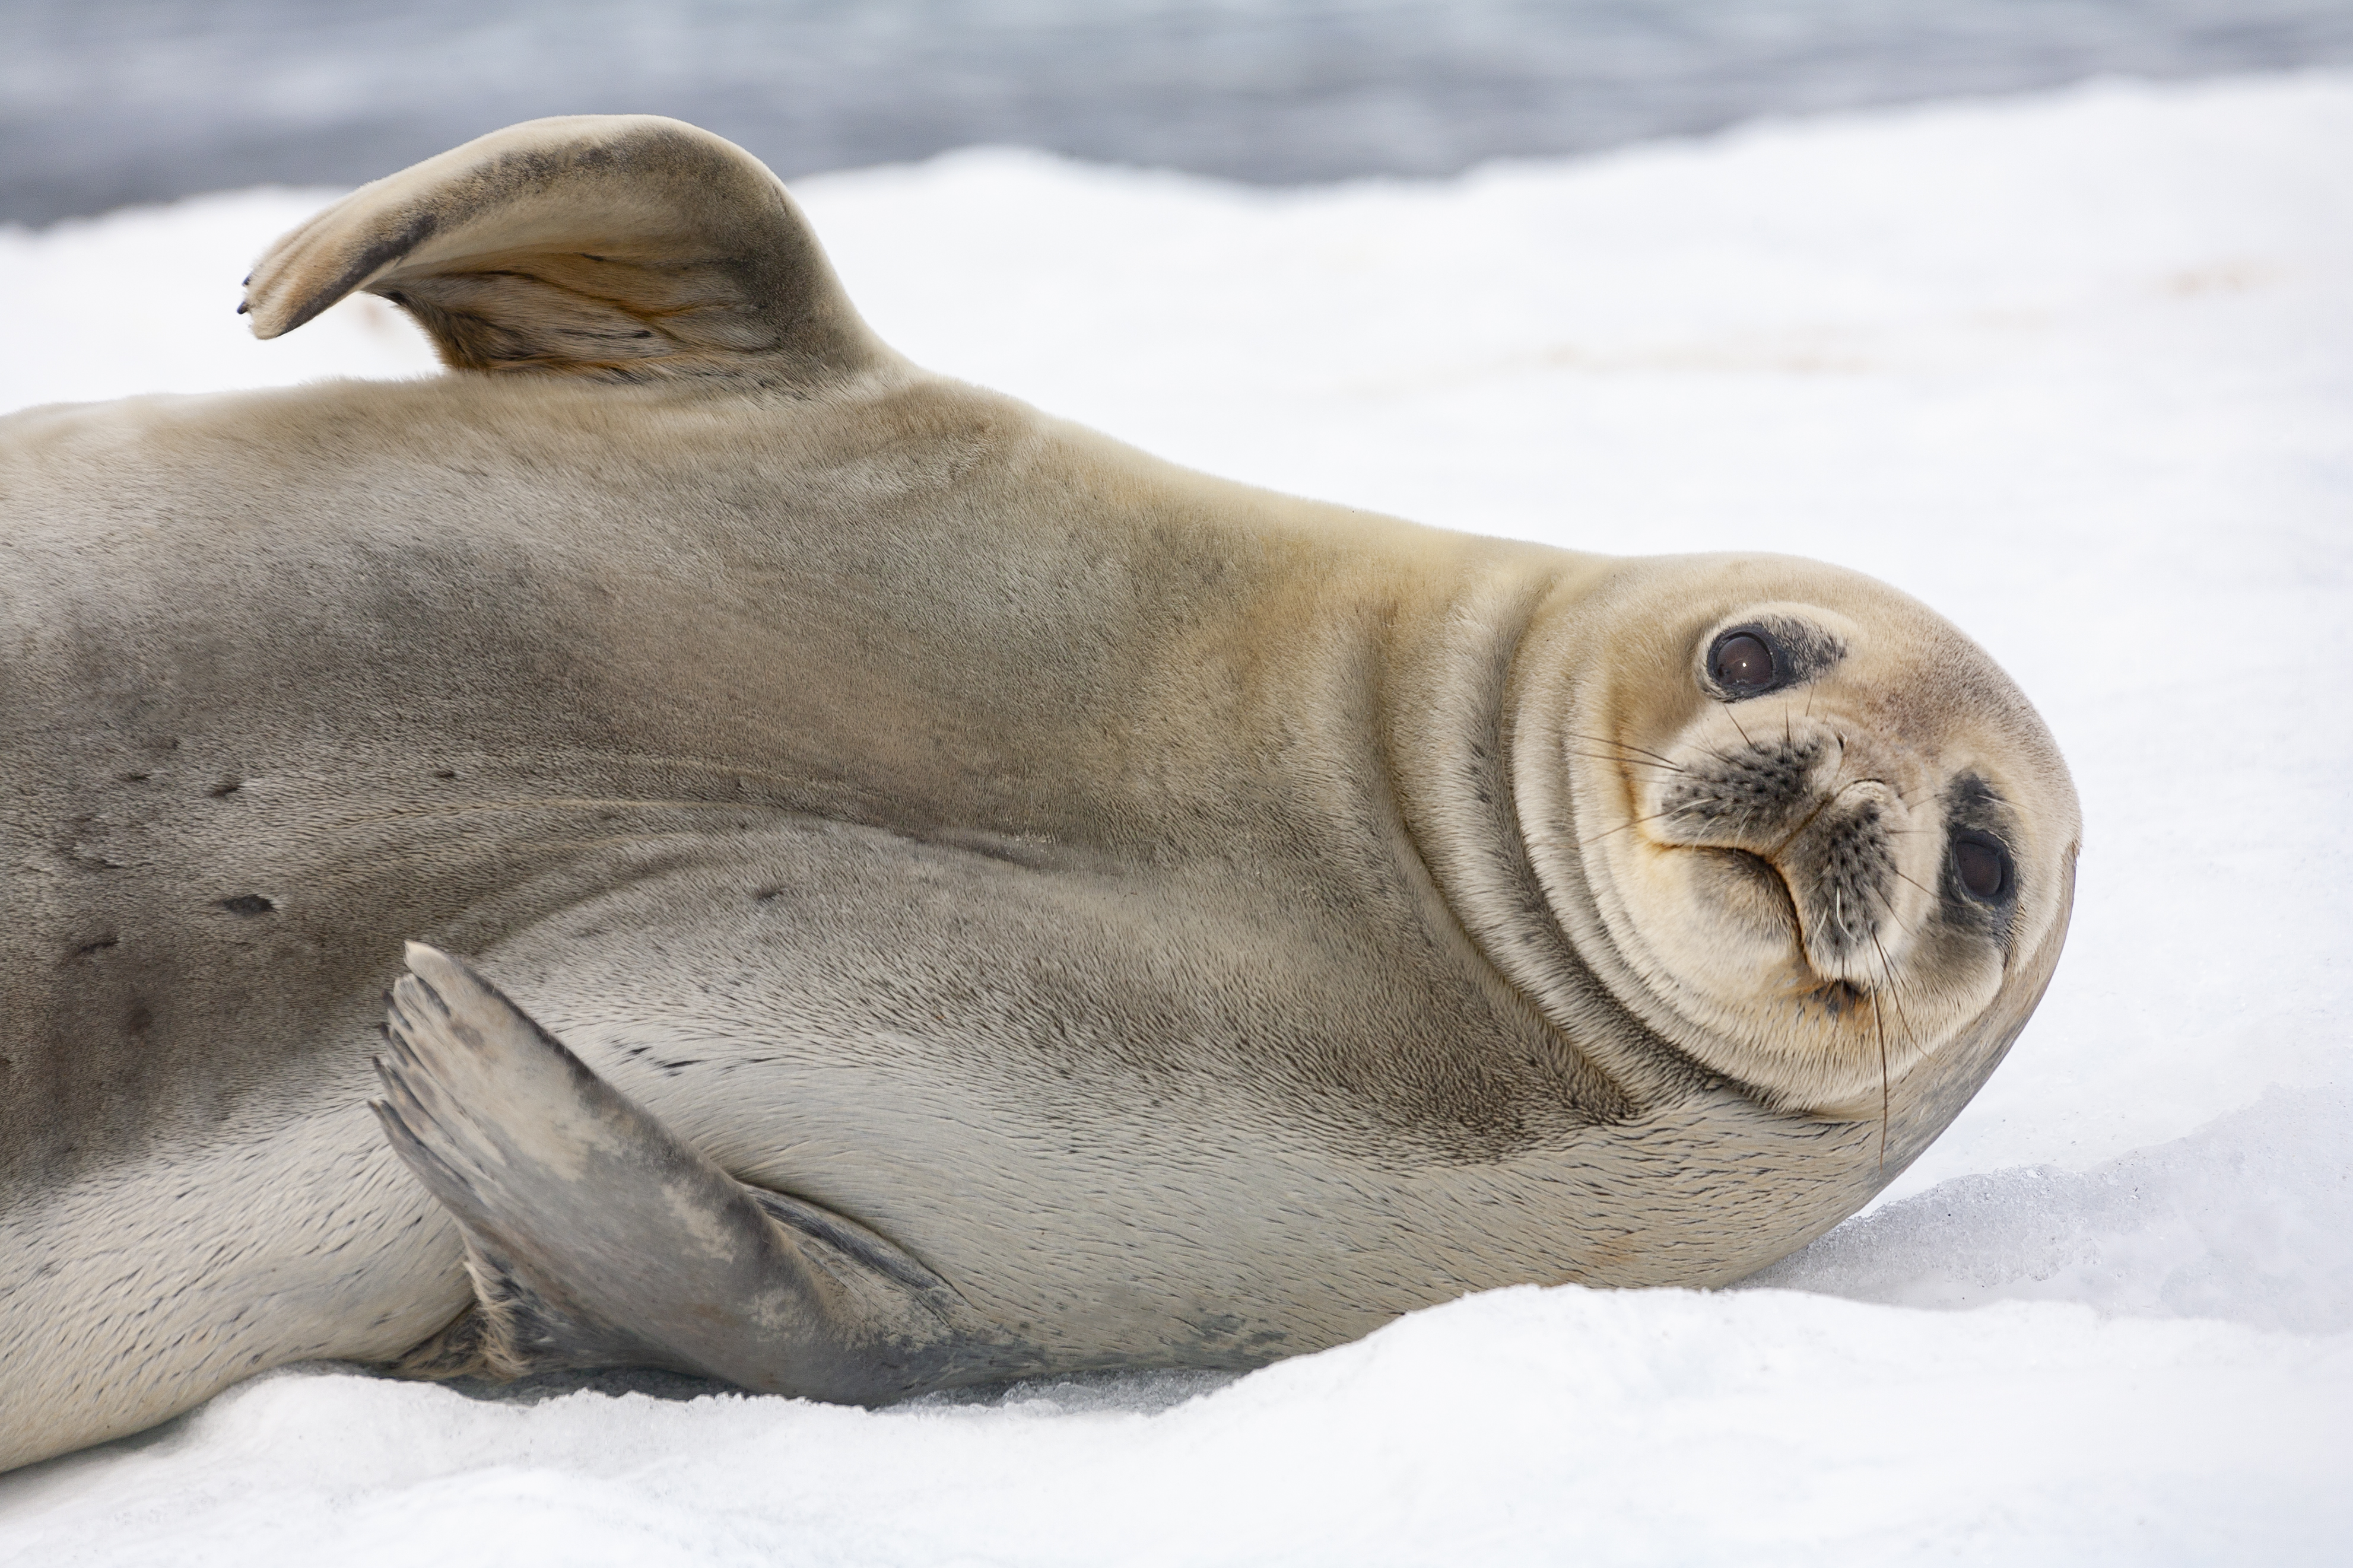 Female Antarctic fur seal on Half Moon Island in the South Shetland Islands, Antarctica. Image Credit: SteveAllenPhoto999, Envato.